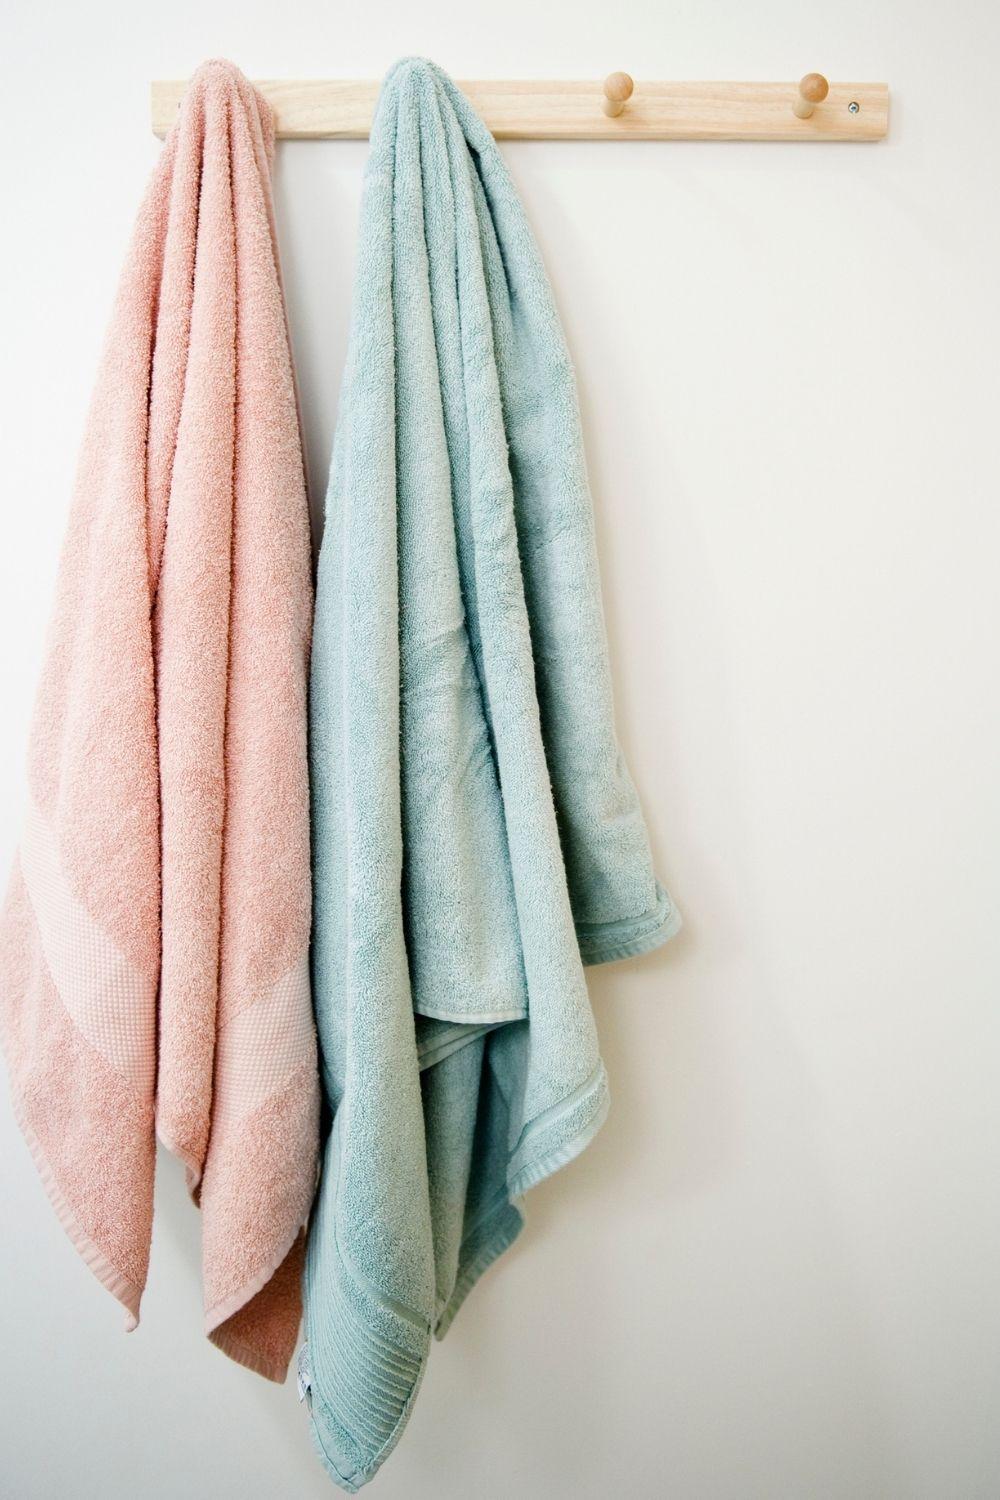 The secret to fresh, fluffy, soft towels